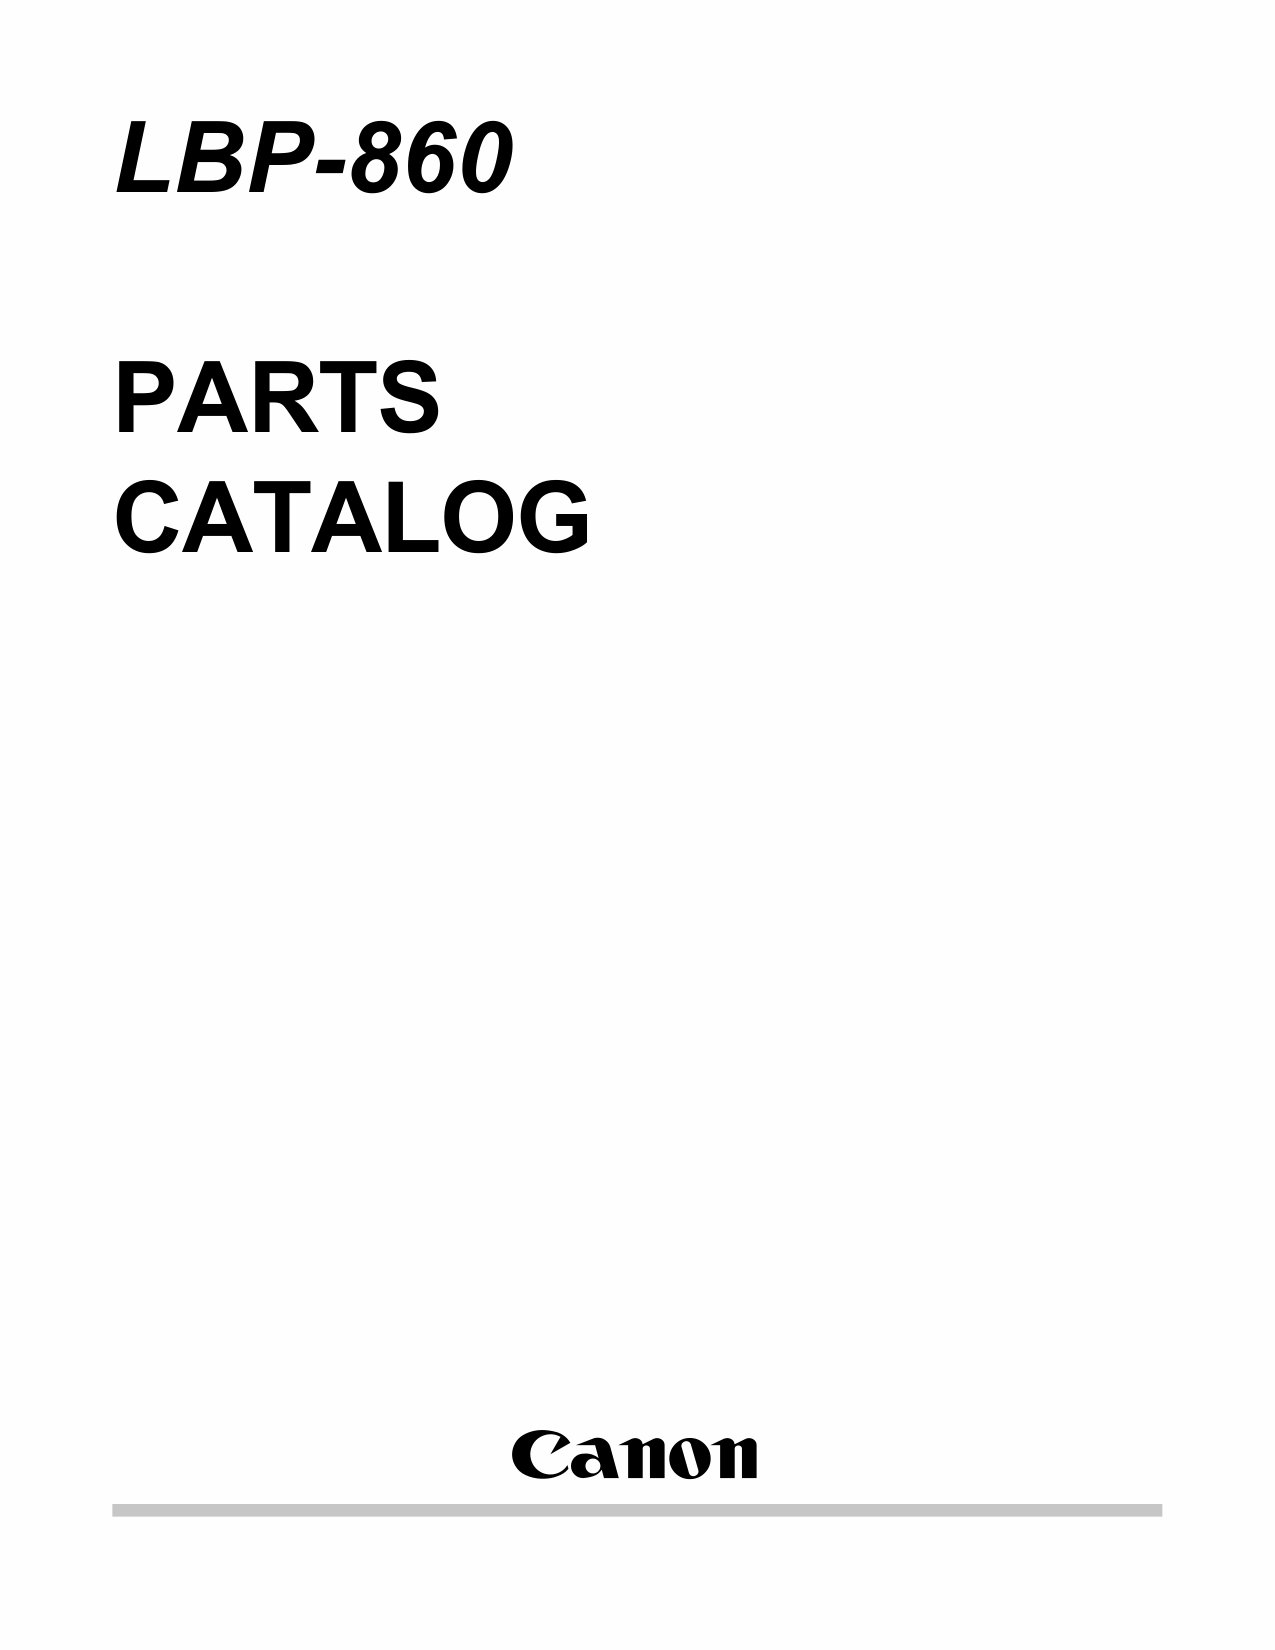 Canon imageCLASS LBP-860 Parts Catalog Manual-1